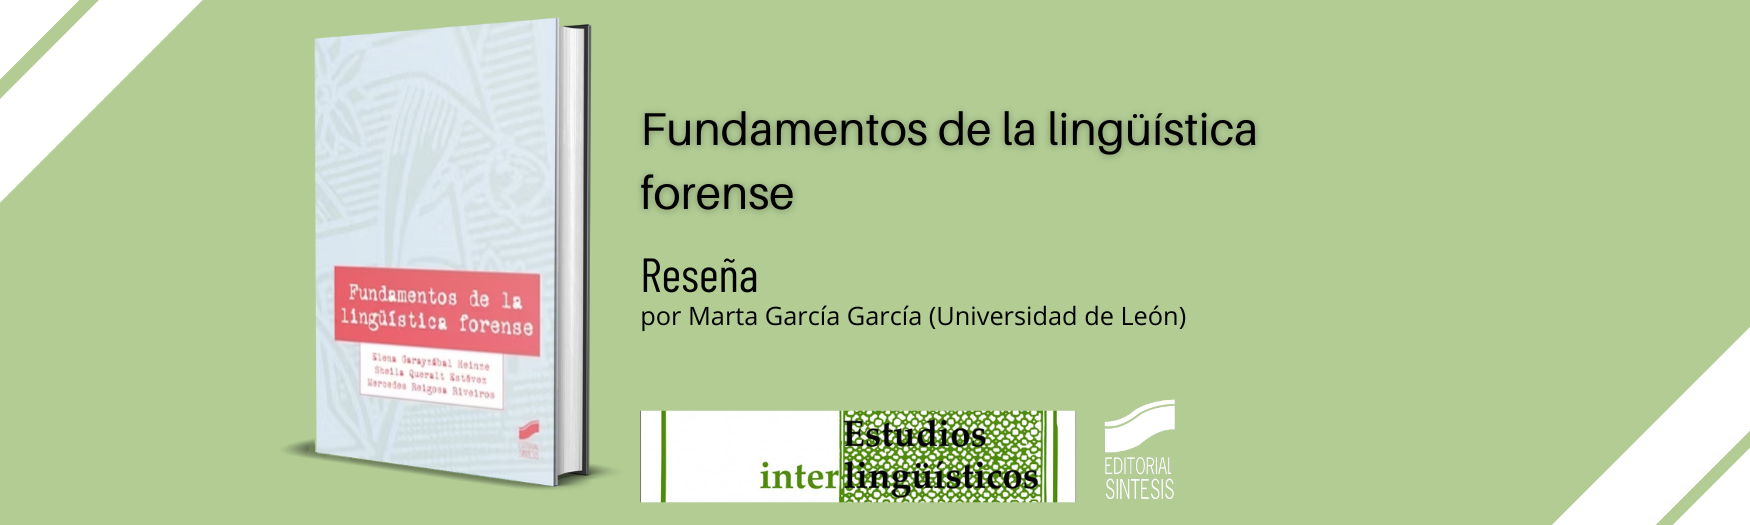 Reseña de Fundamentos de la lingüística forense